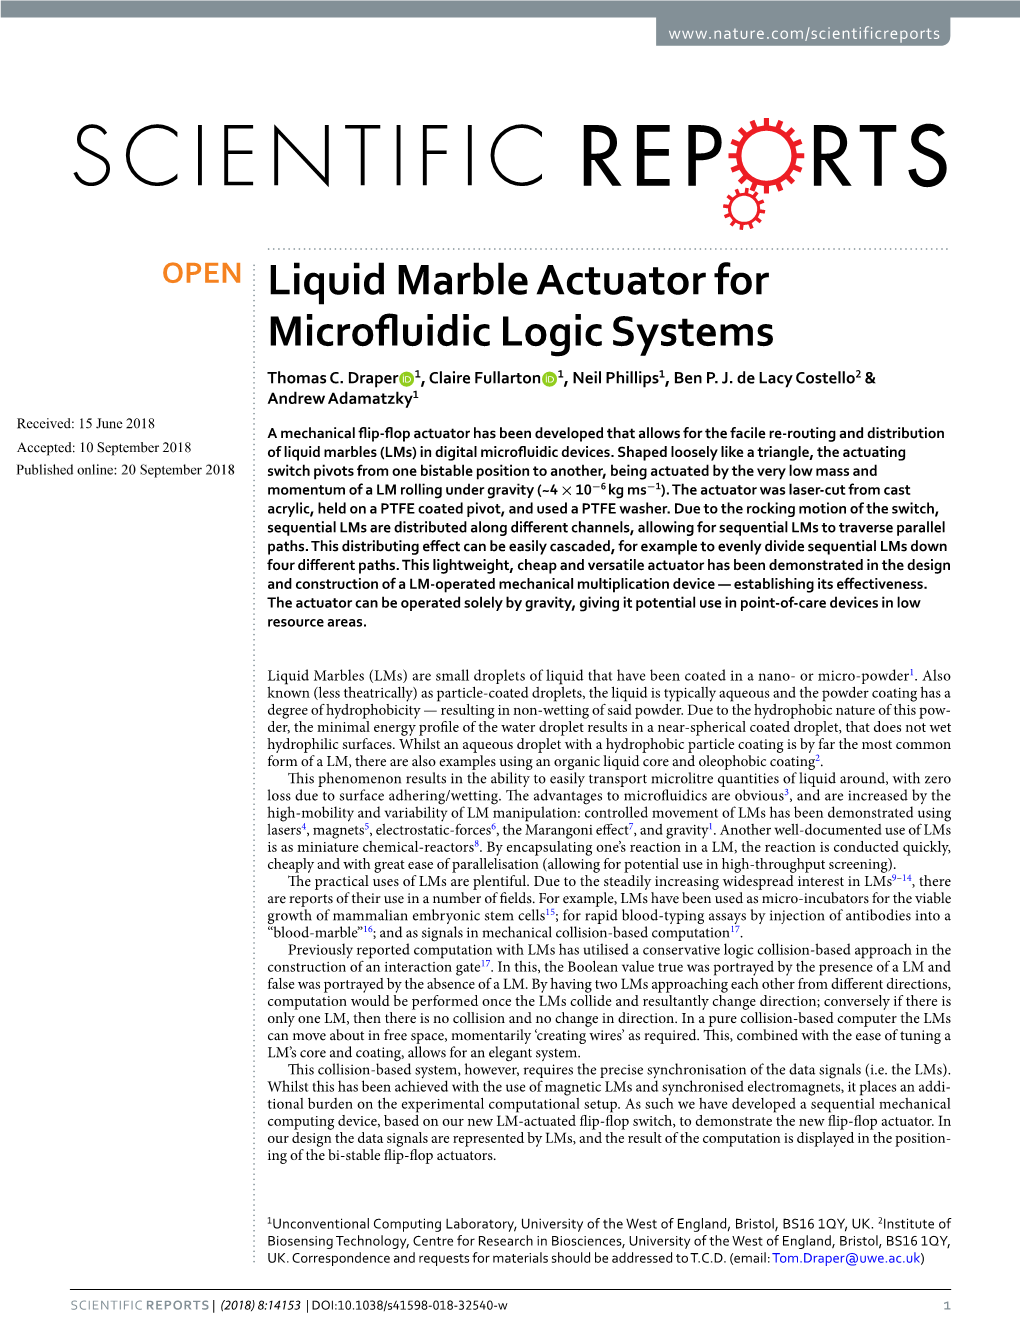 Liquid Marble Actuator for Microfluidic Logic Systems